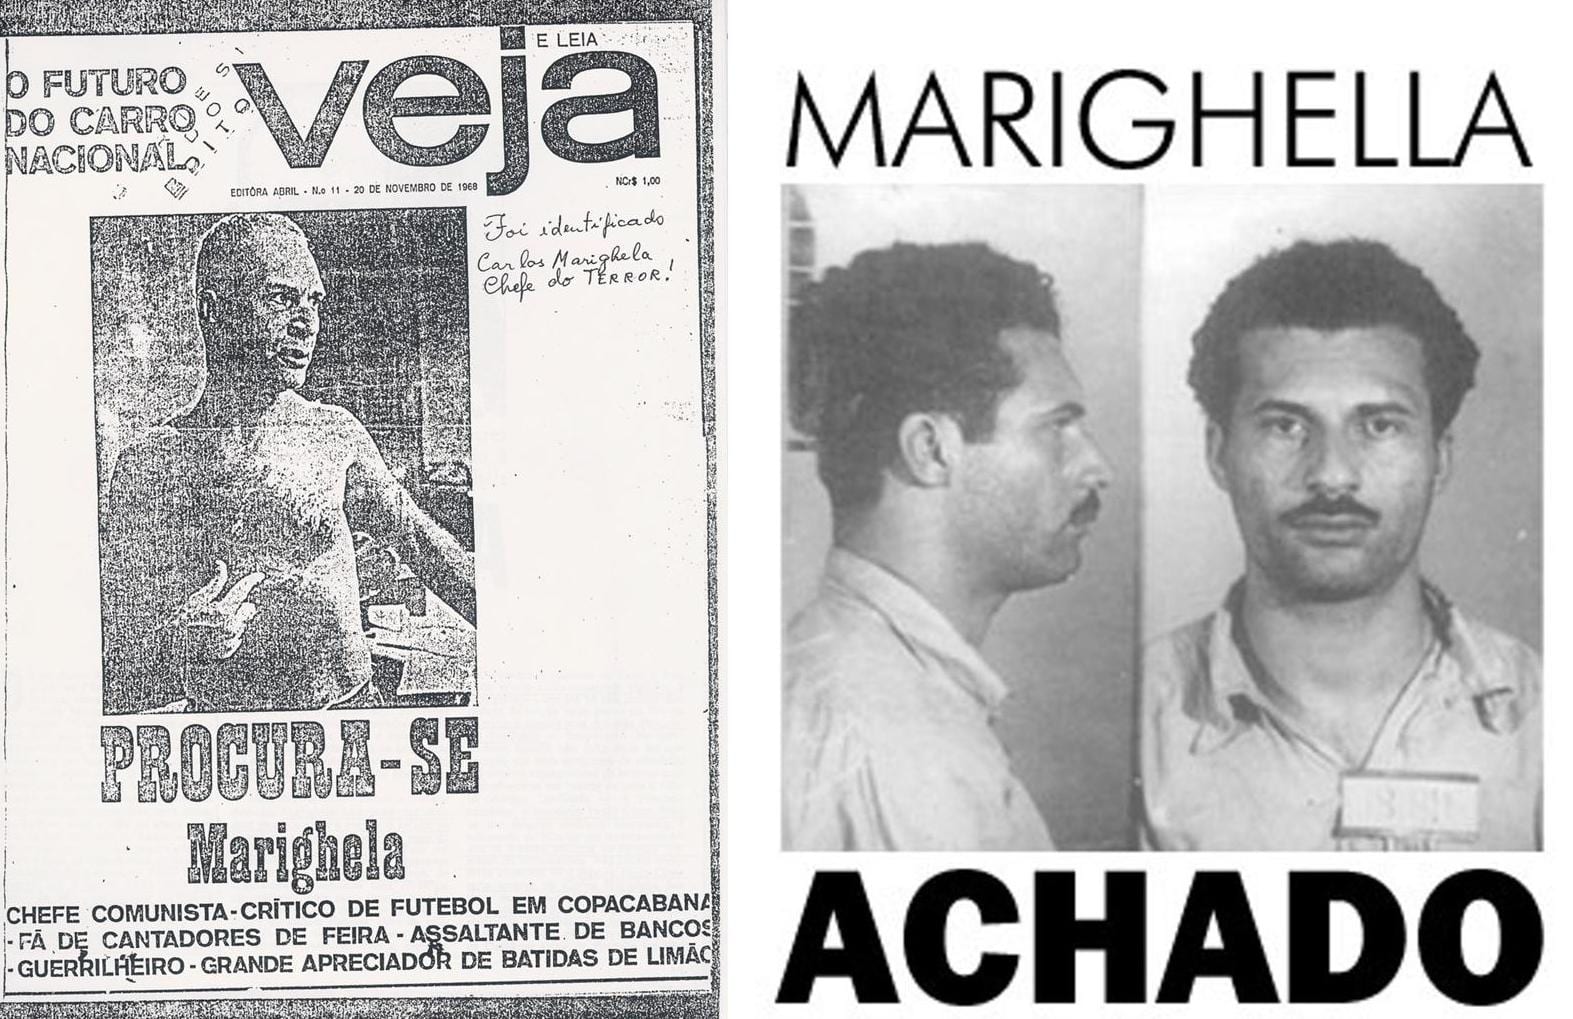 Carlos Marighella - Entenda quem foi e a sua importancia no Brasil